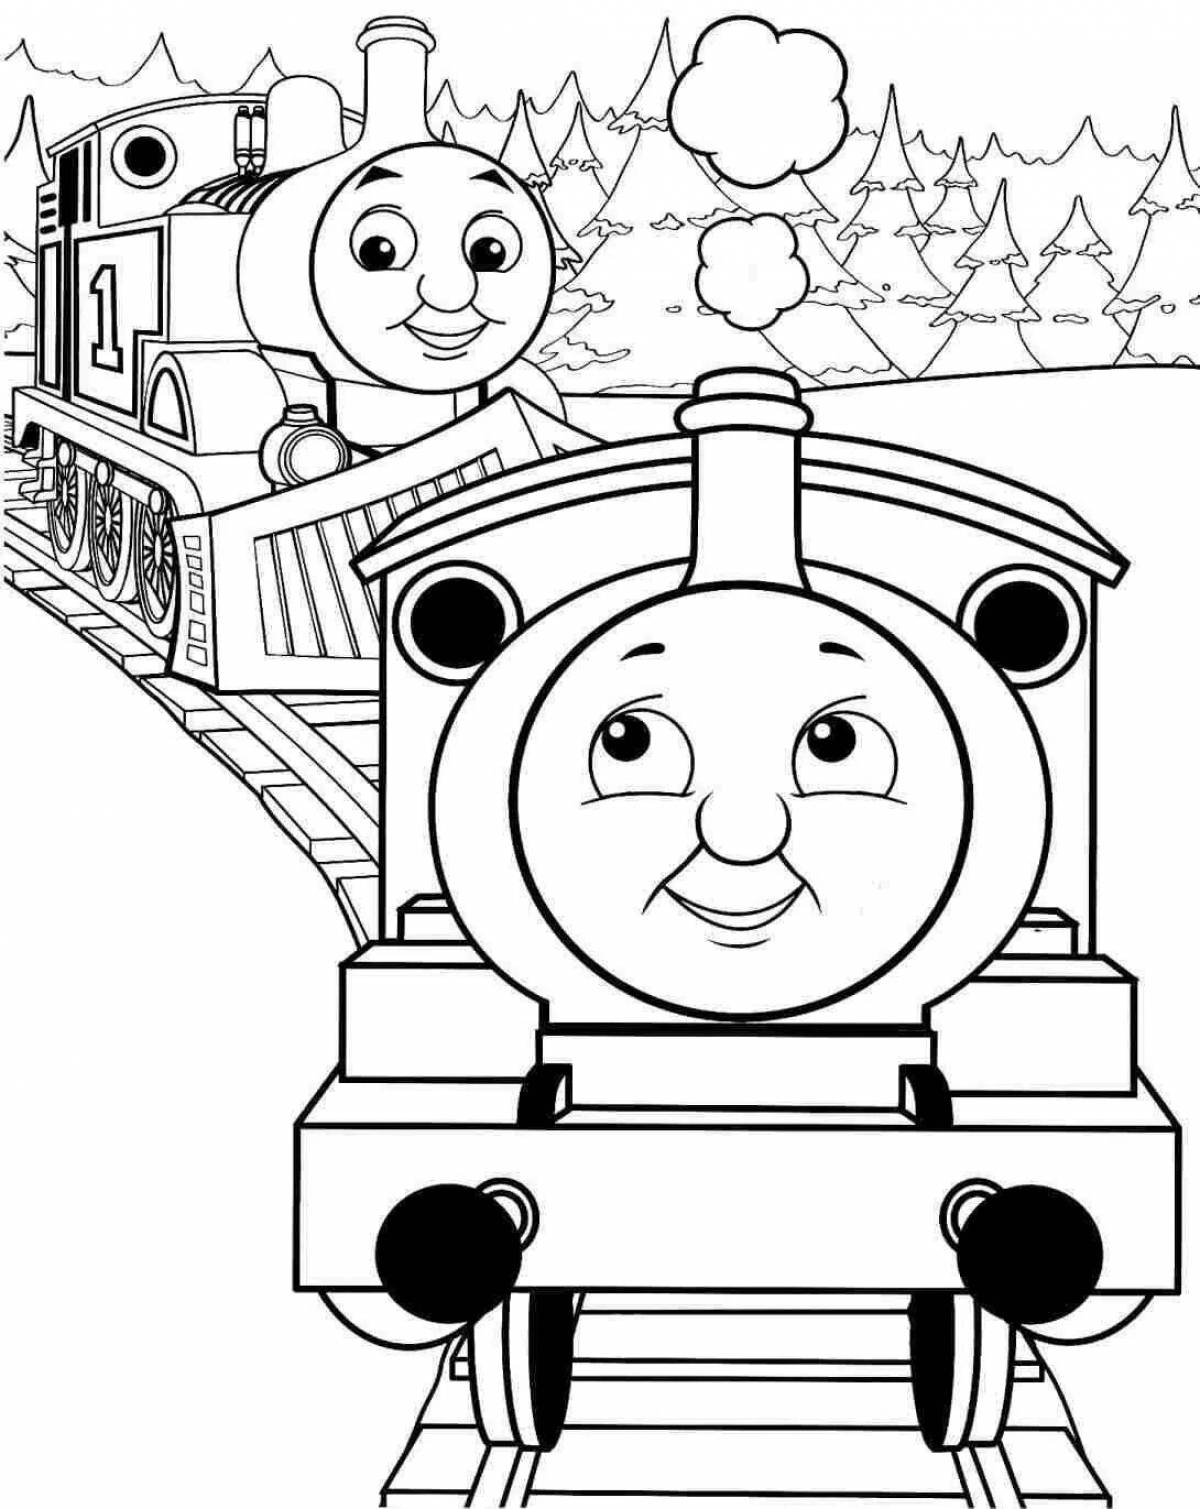 Sweet Thomas train coloring page